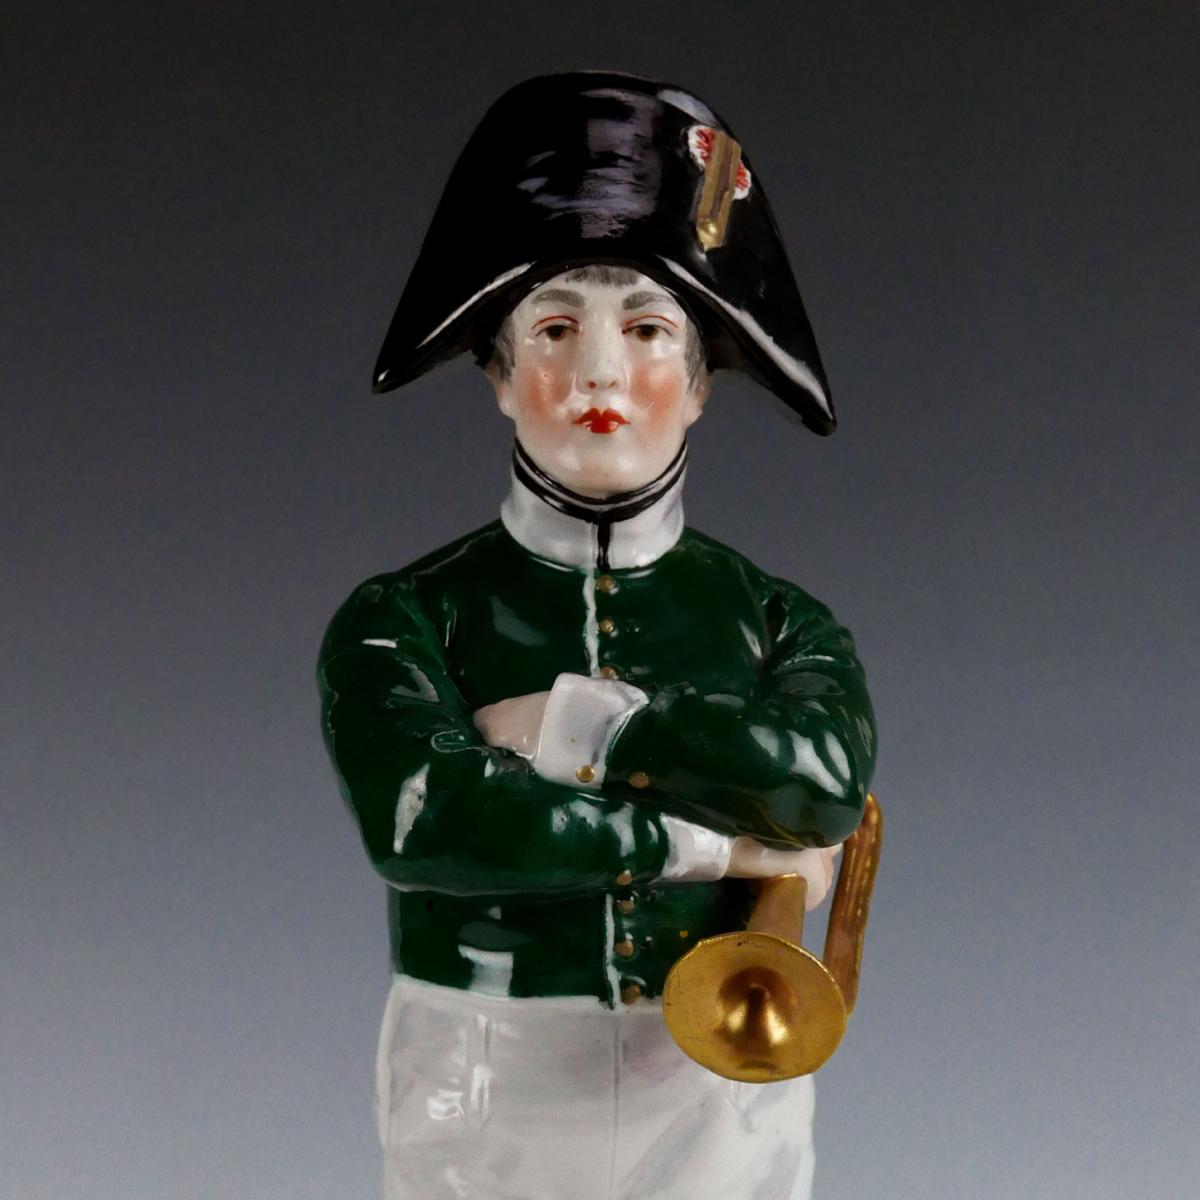 Trumpette de Saint-Germain, 1800 | BADA